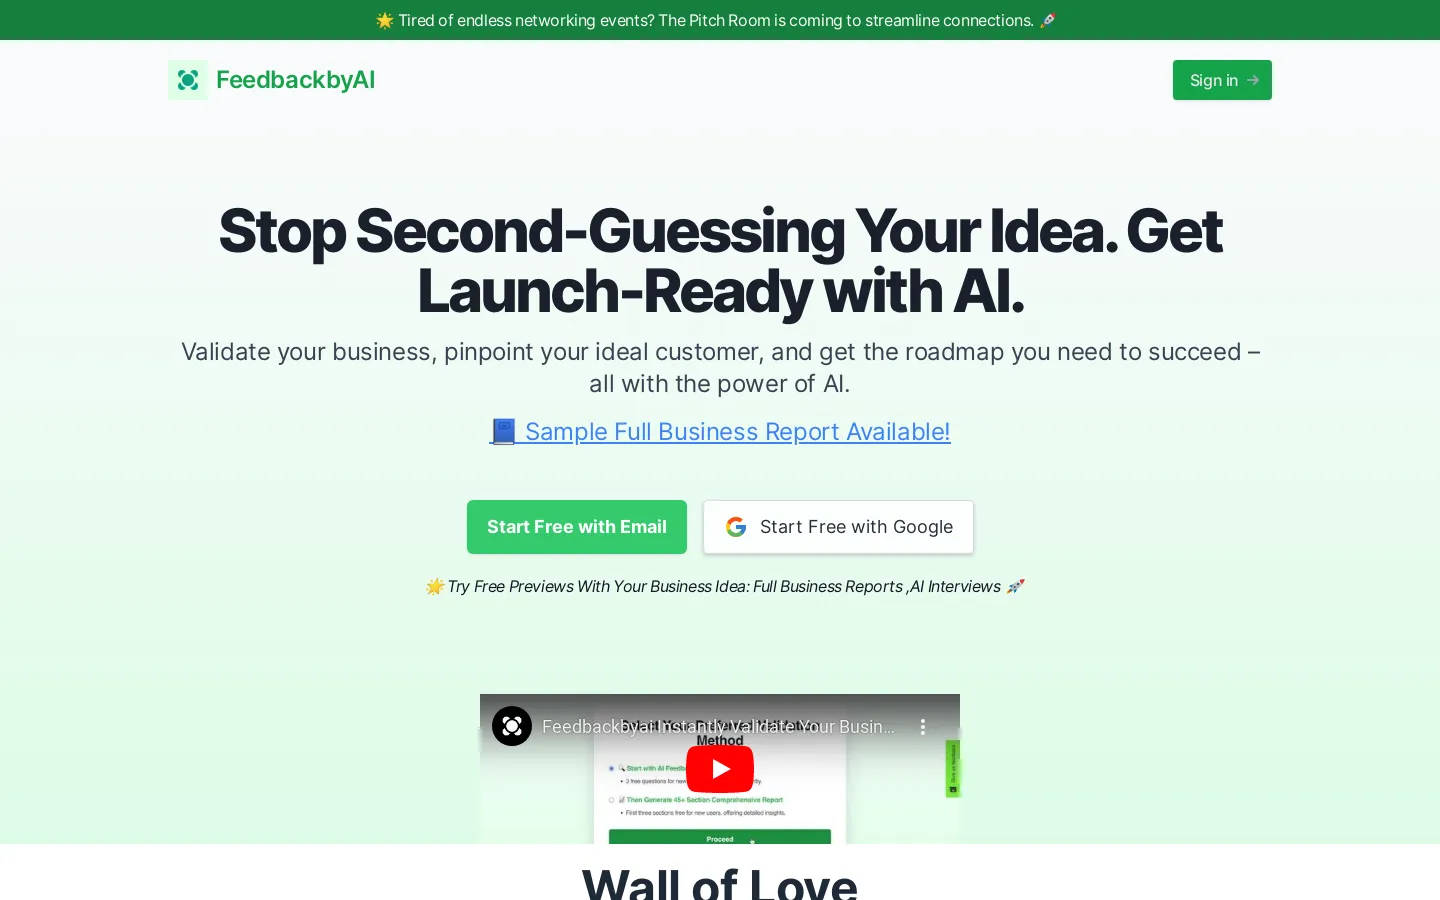 Feedbackbyai - Instantly Validate Your Business Idea using AI